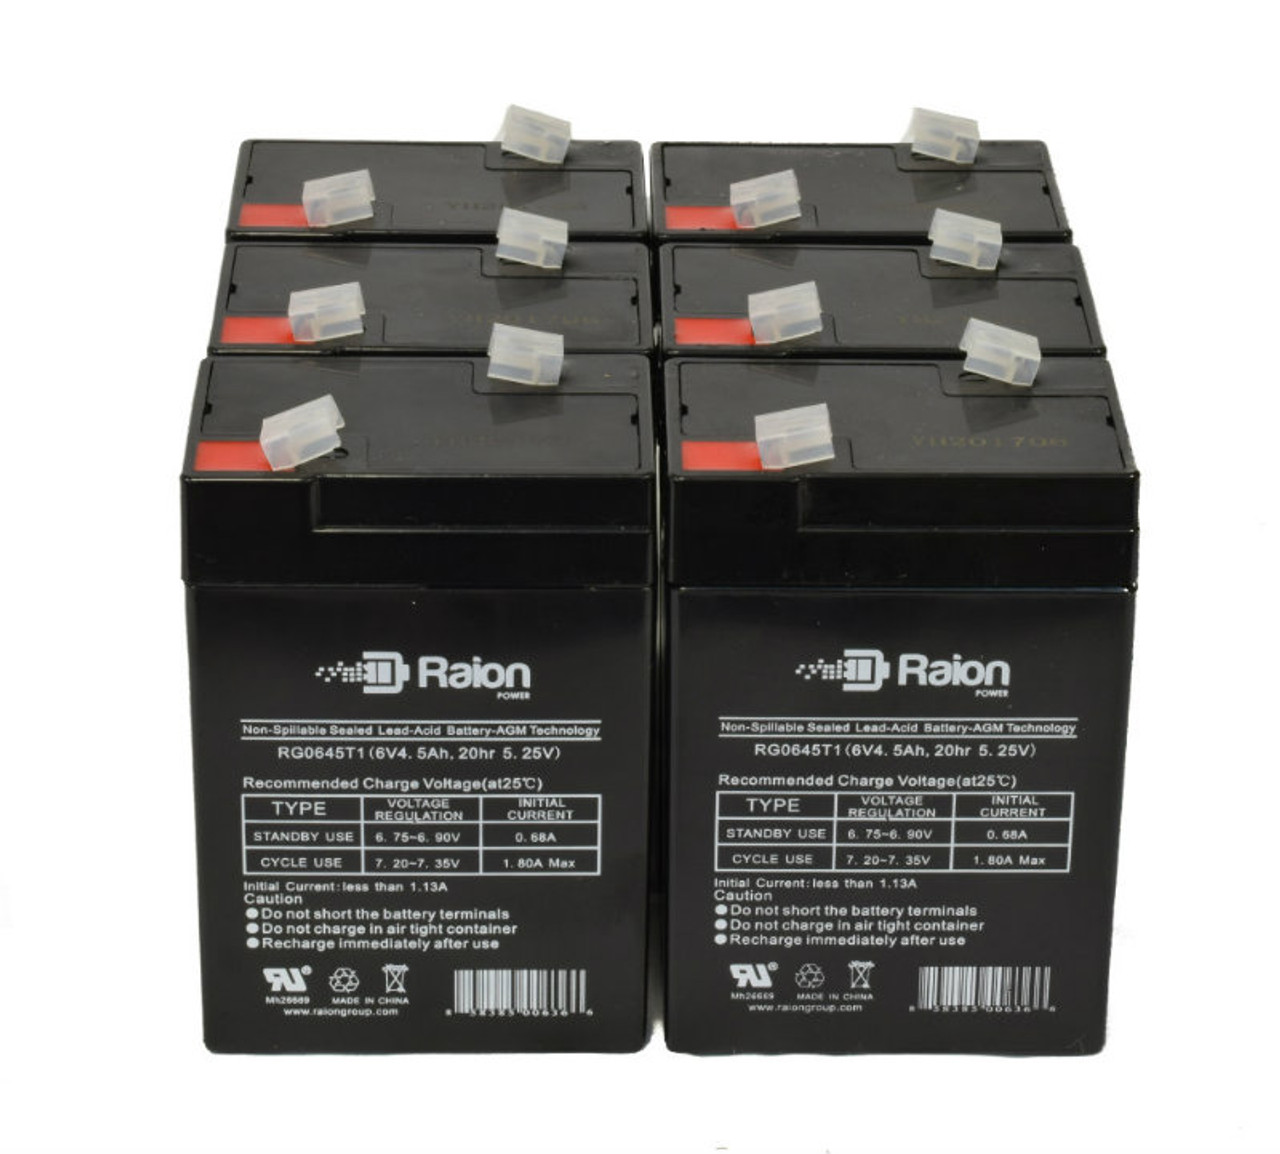 Raion Power 6 Volt 4.5Ah RG0645T1 Replacement Battery for BatteryMart SLA-6V4-5 - 6 Pack